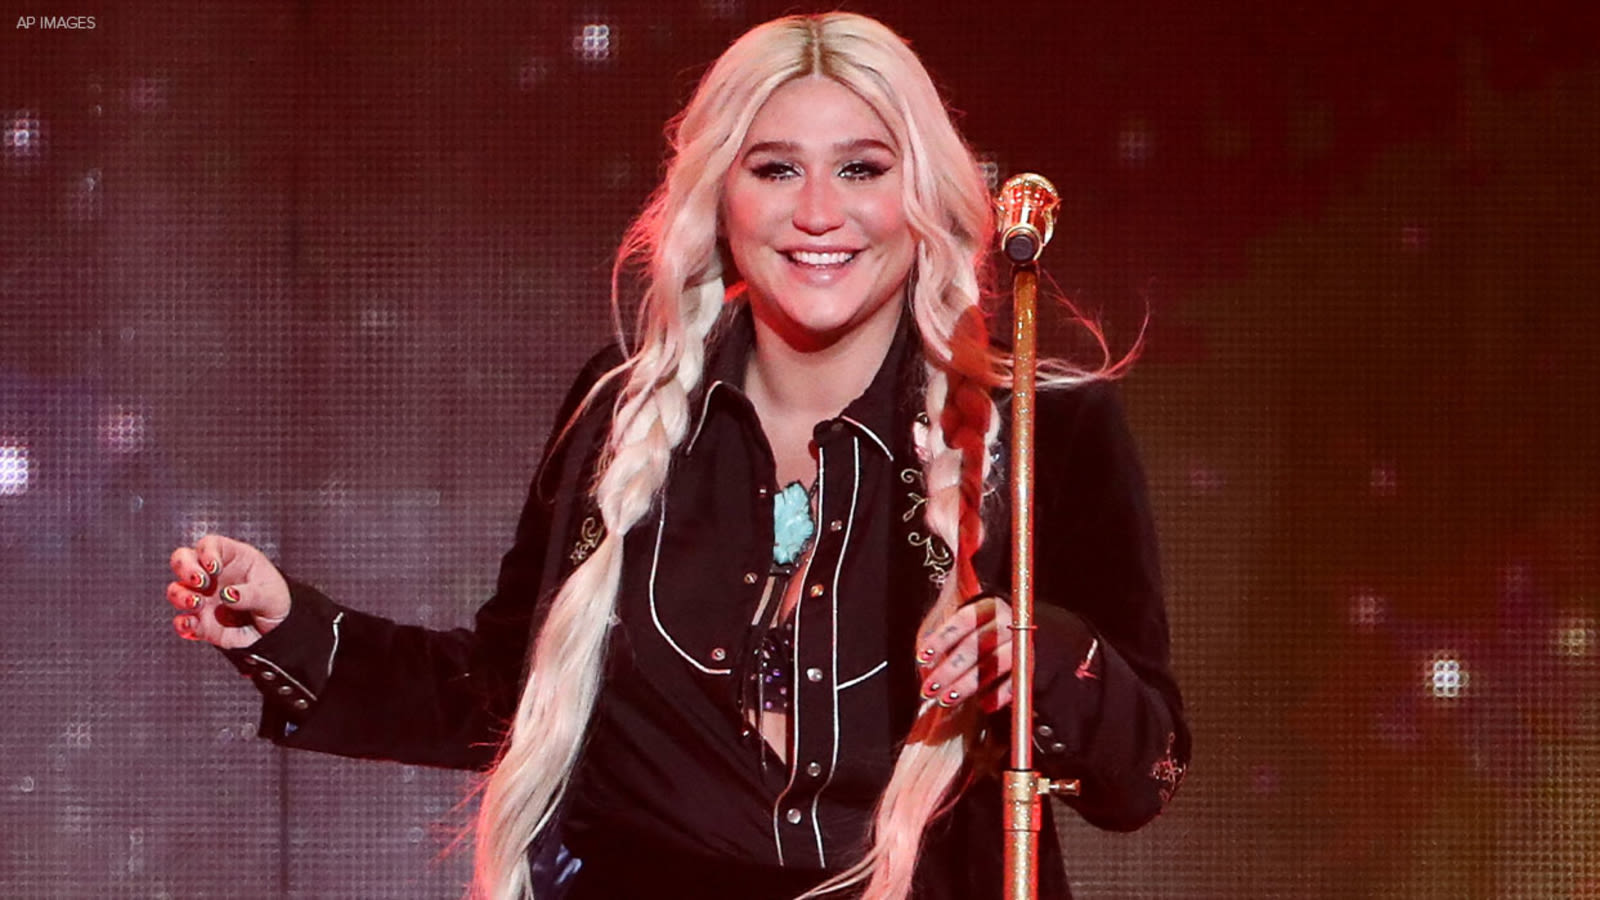 WeHo Pride Weekend kicks off with free 'Friday Night' concert headlined by Kesha